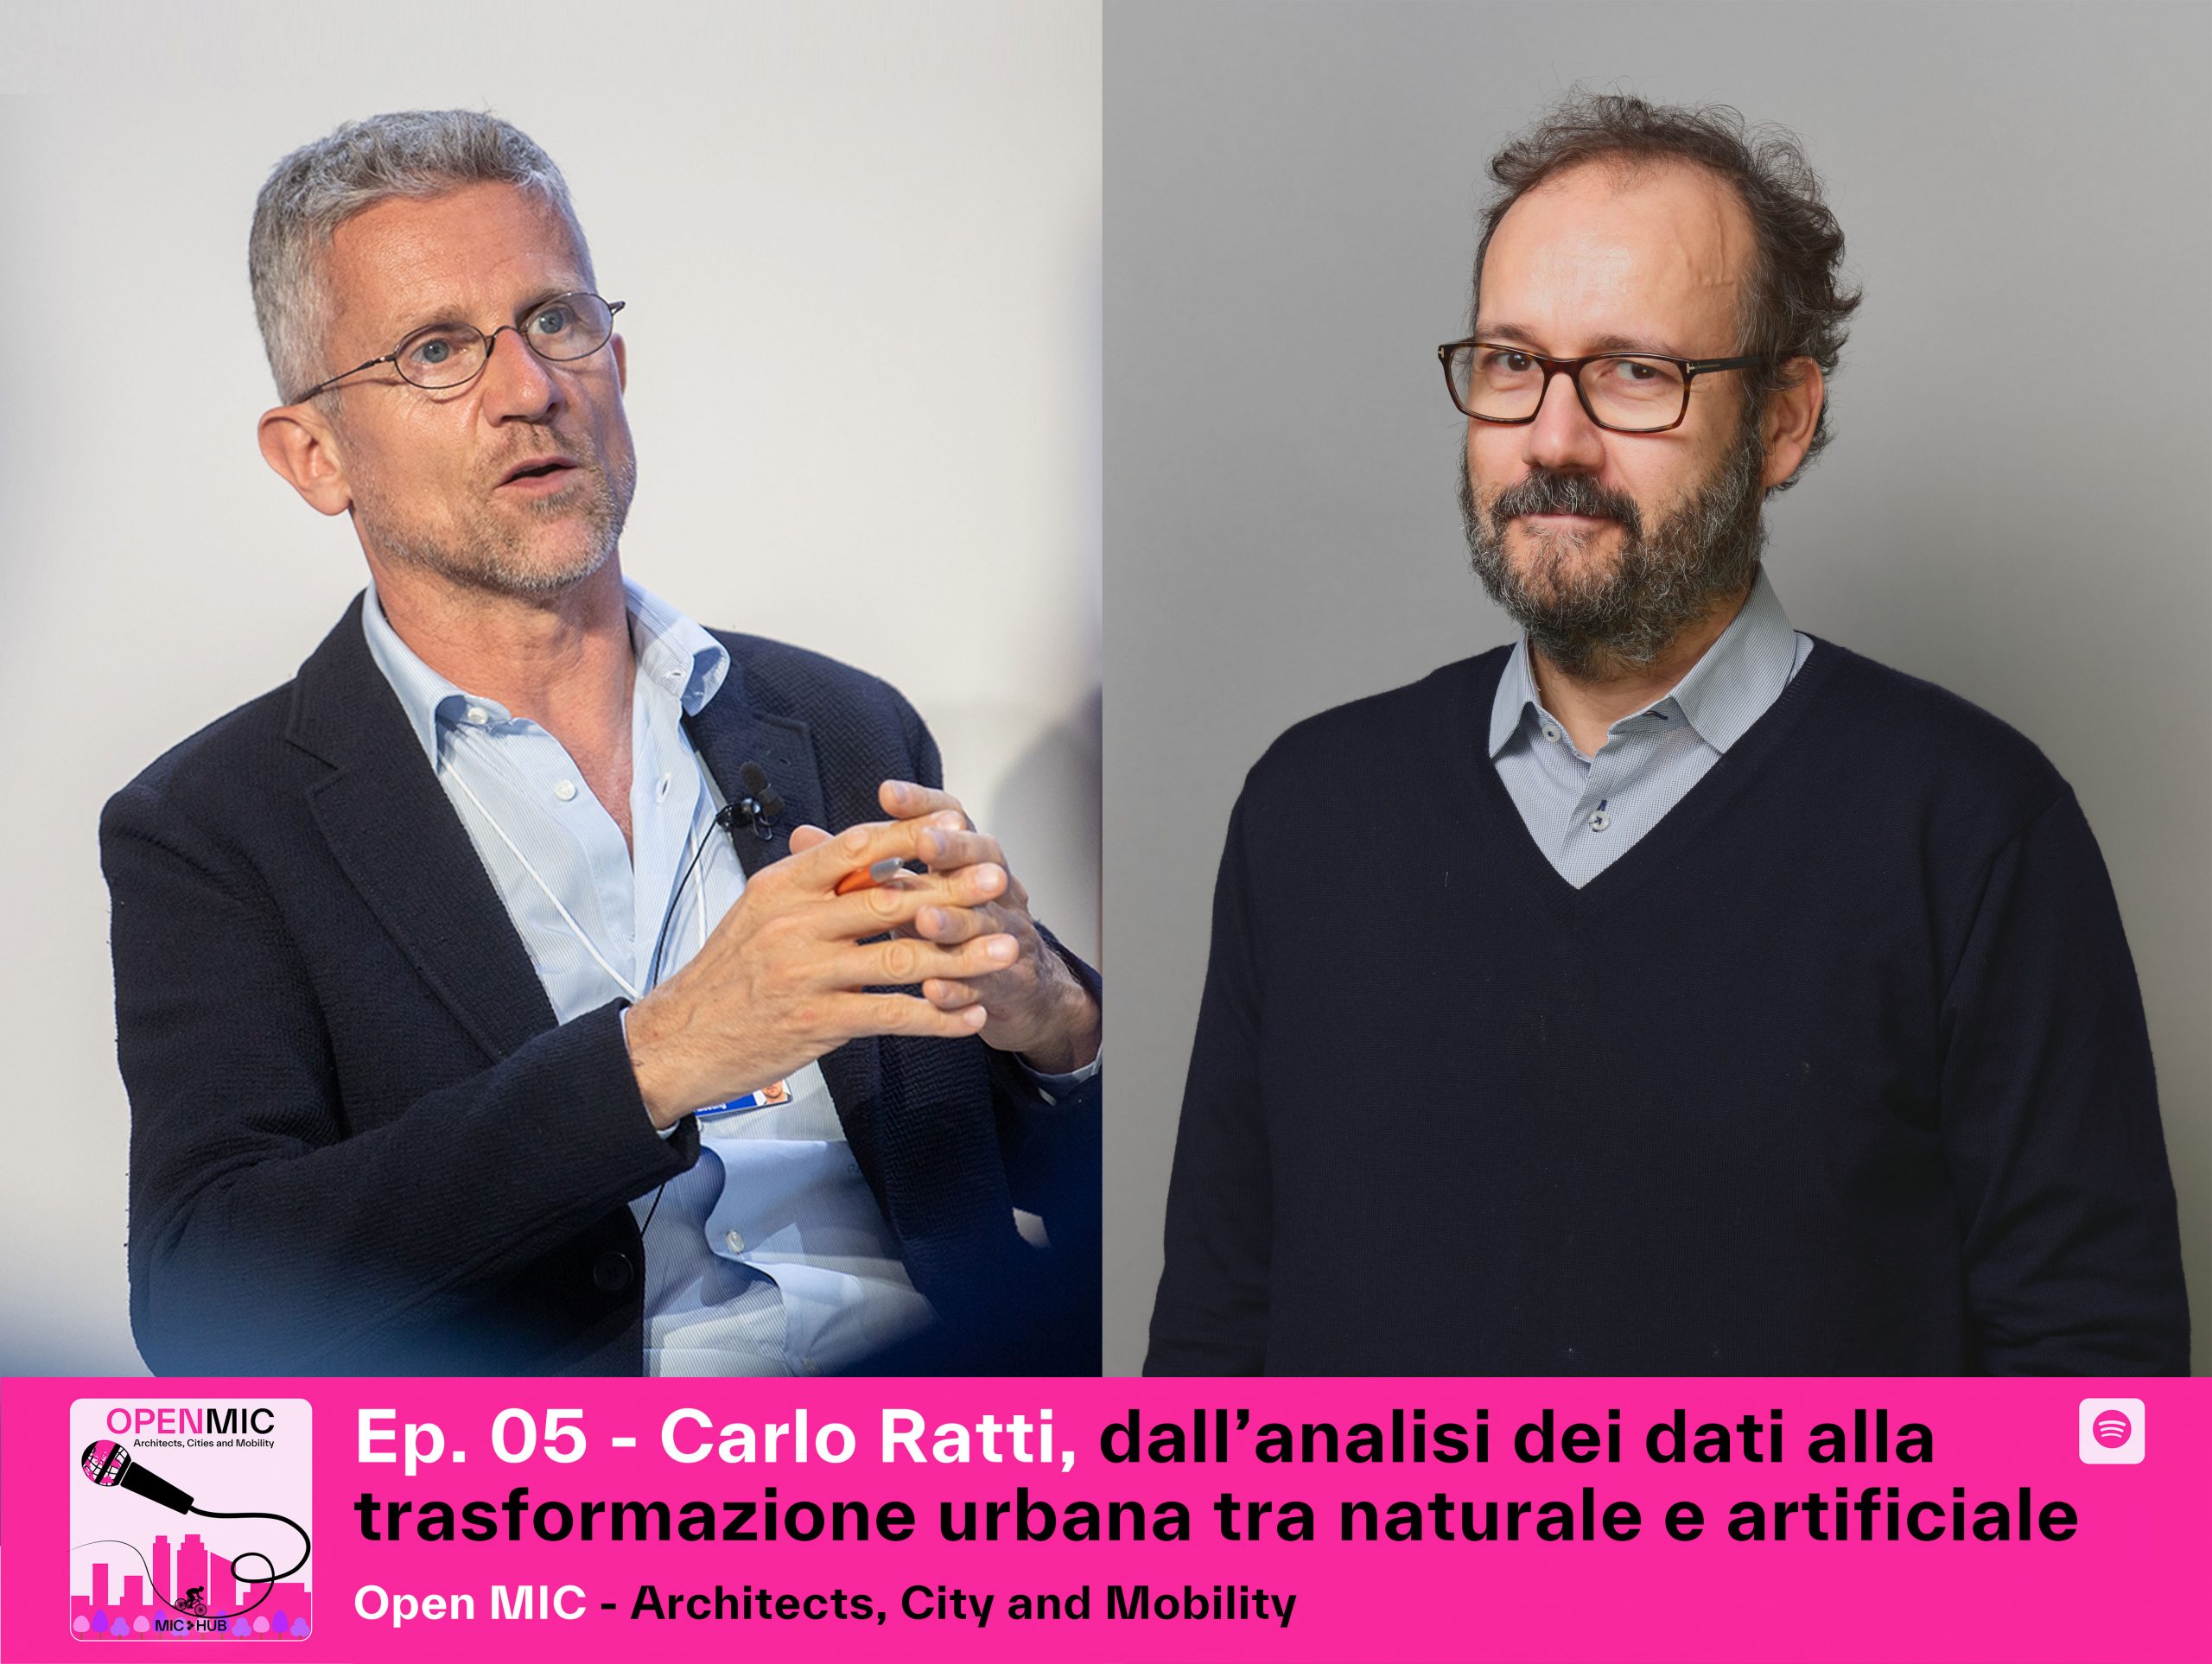 Federico Parolotto and Carlo Ratti (Photo © World Economic Forum, Mattias Nutt)